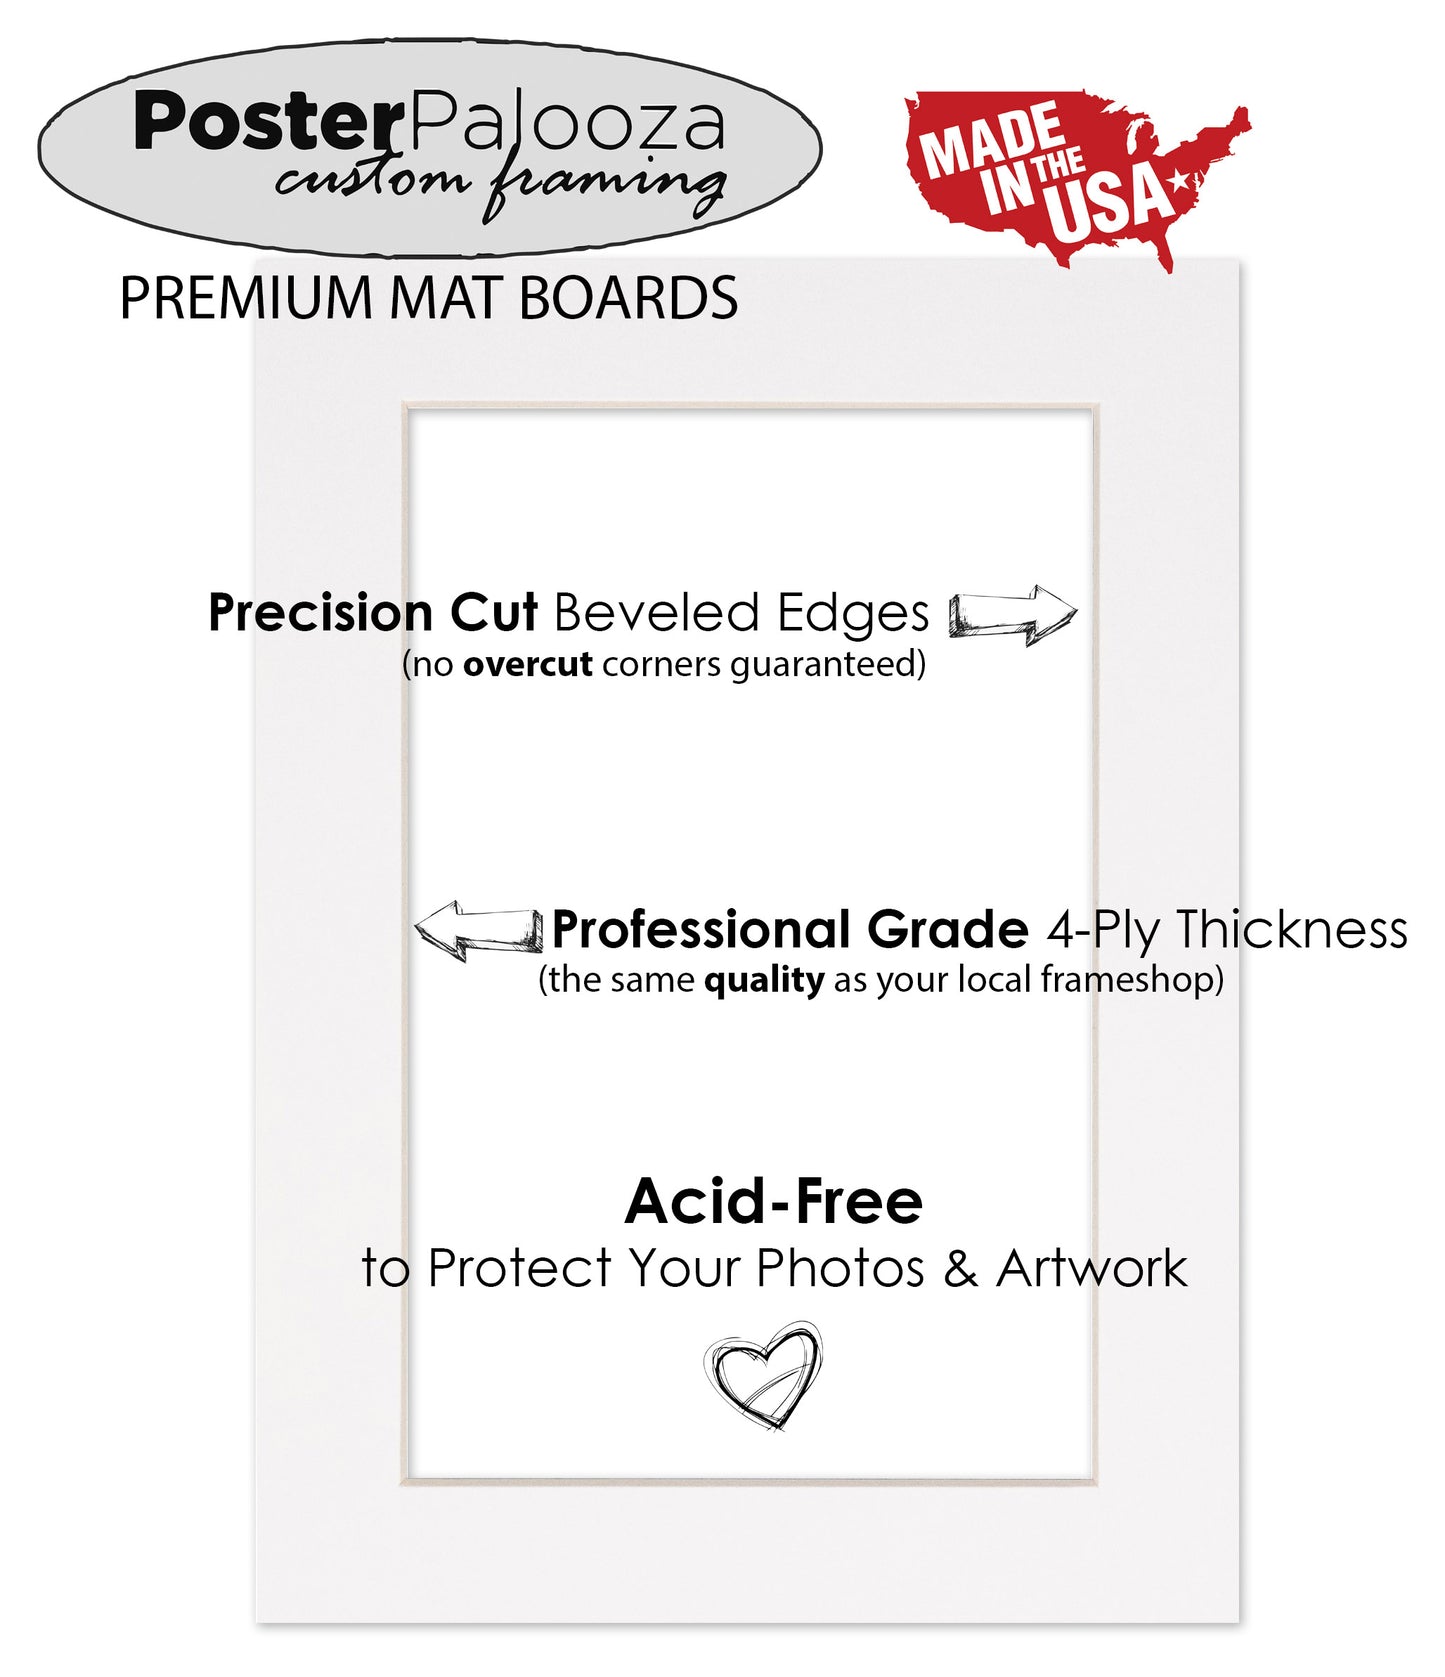 Pack of 25 Soft Pink Precut Acid-Free Matboards